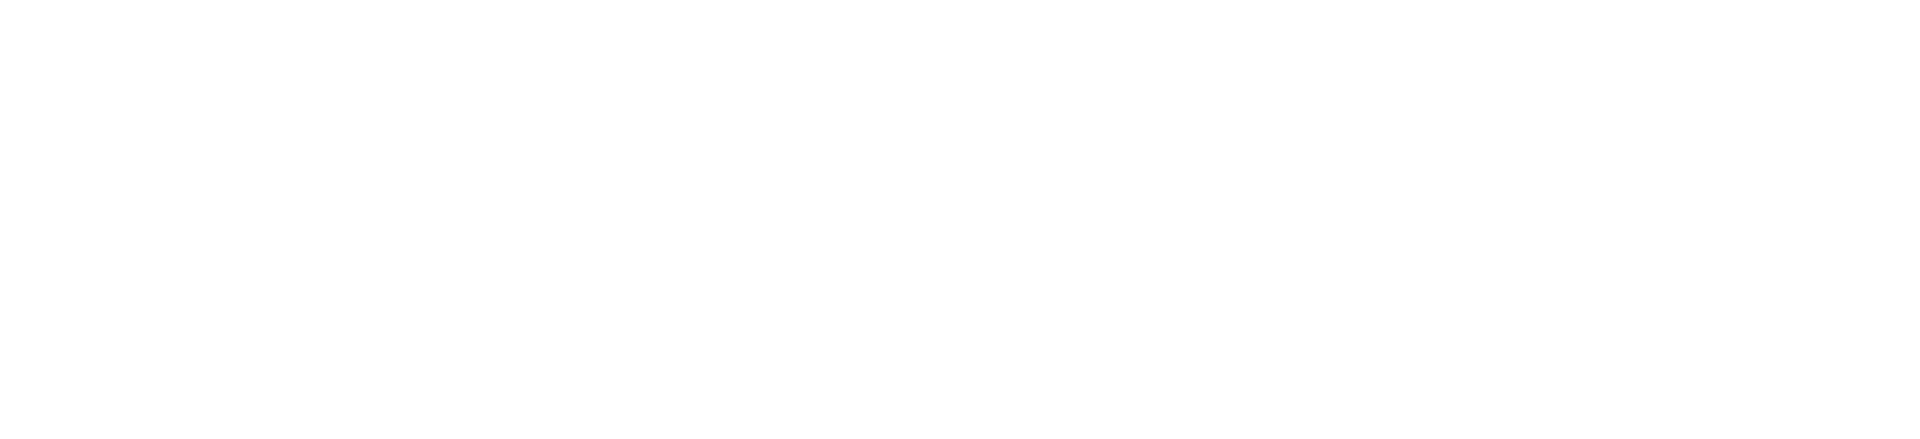 Showtic logotyp